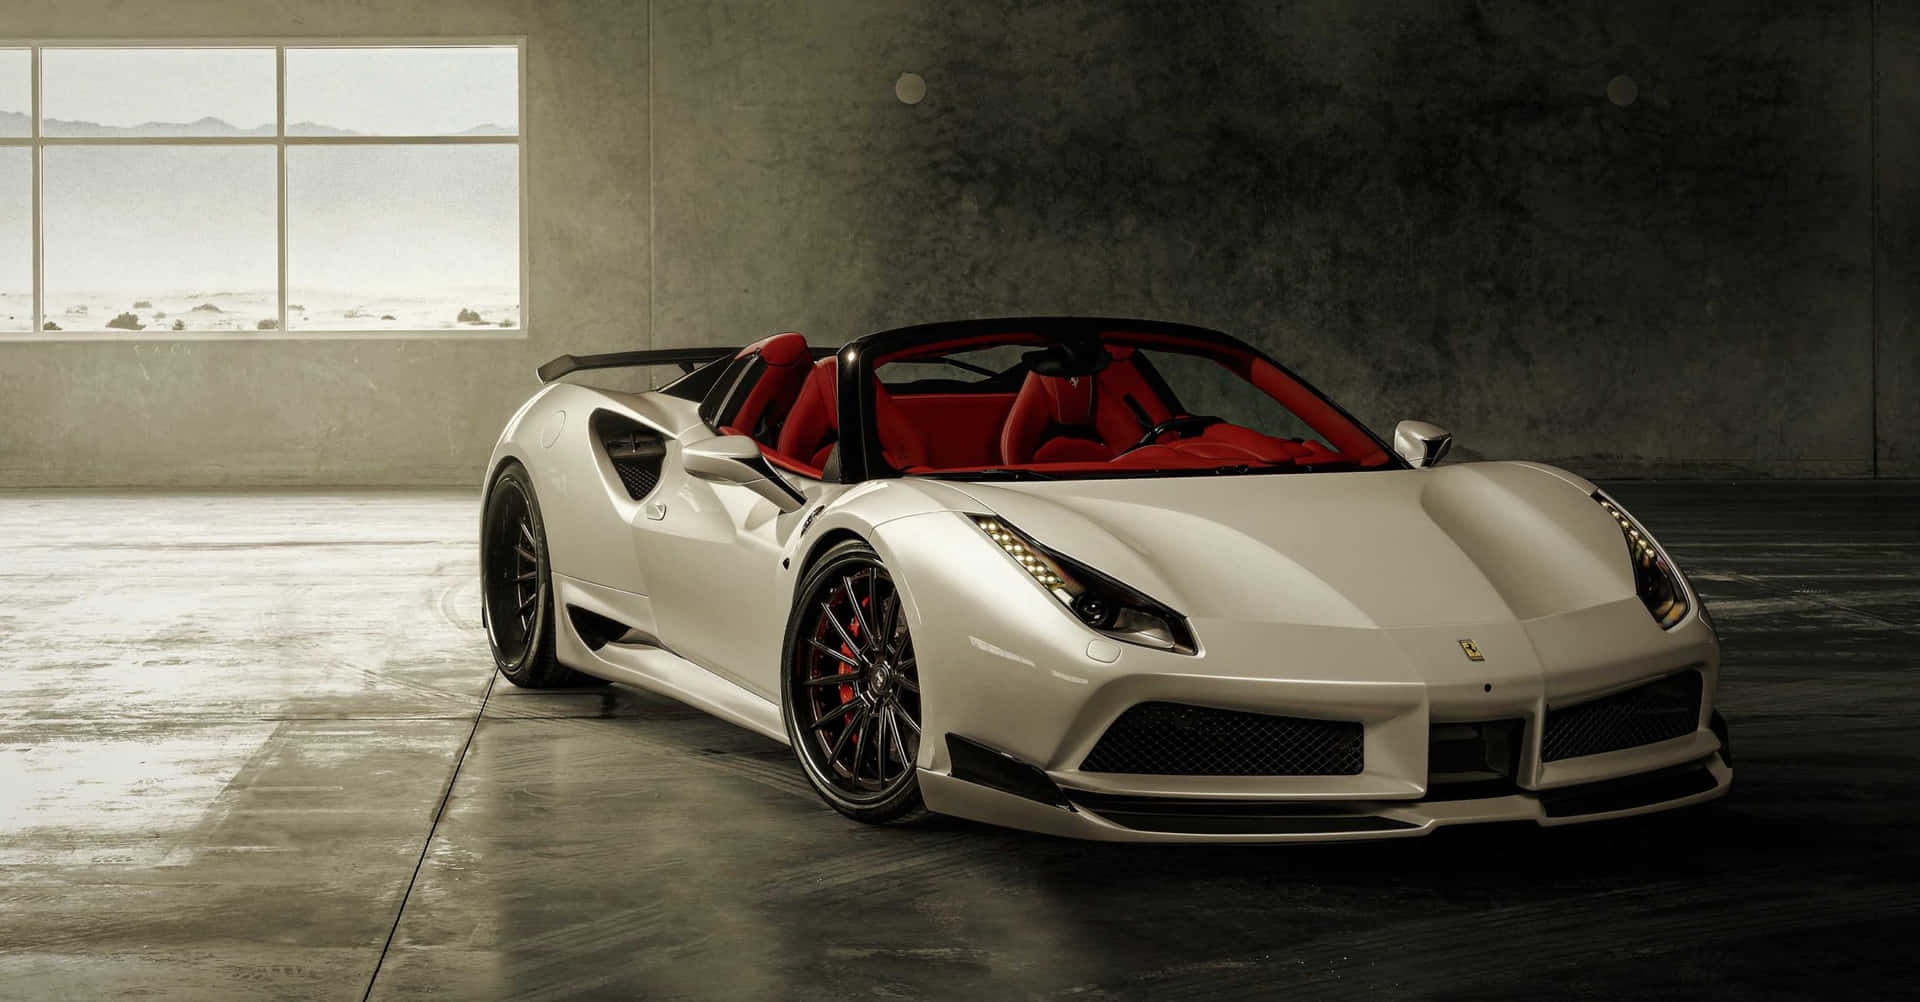 Caption: Pristine White Ferrari After Professional Car Detailing Wallpaper